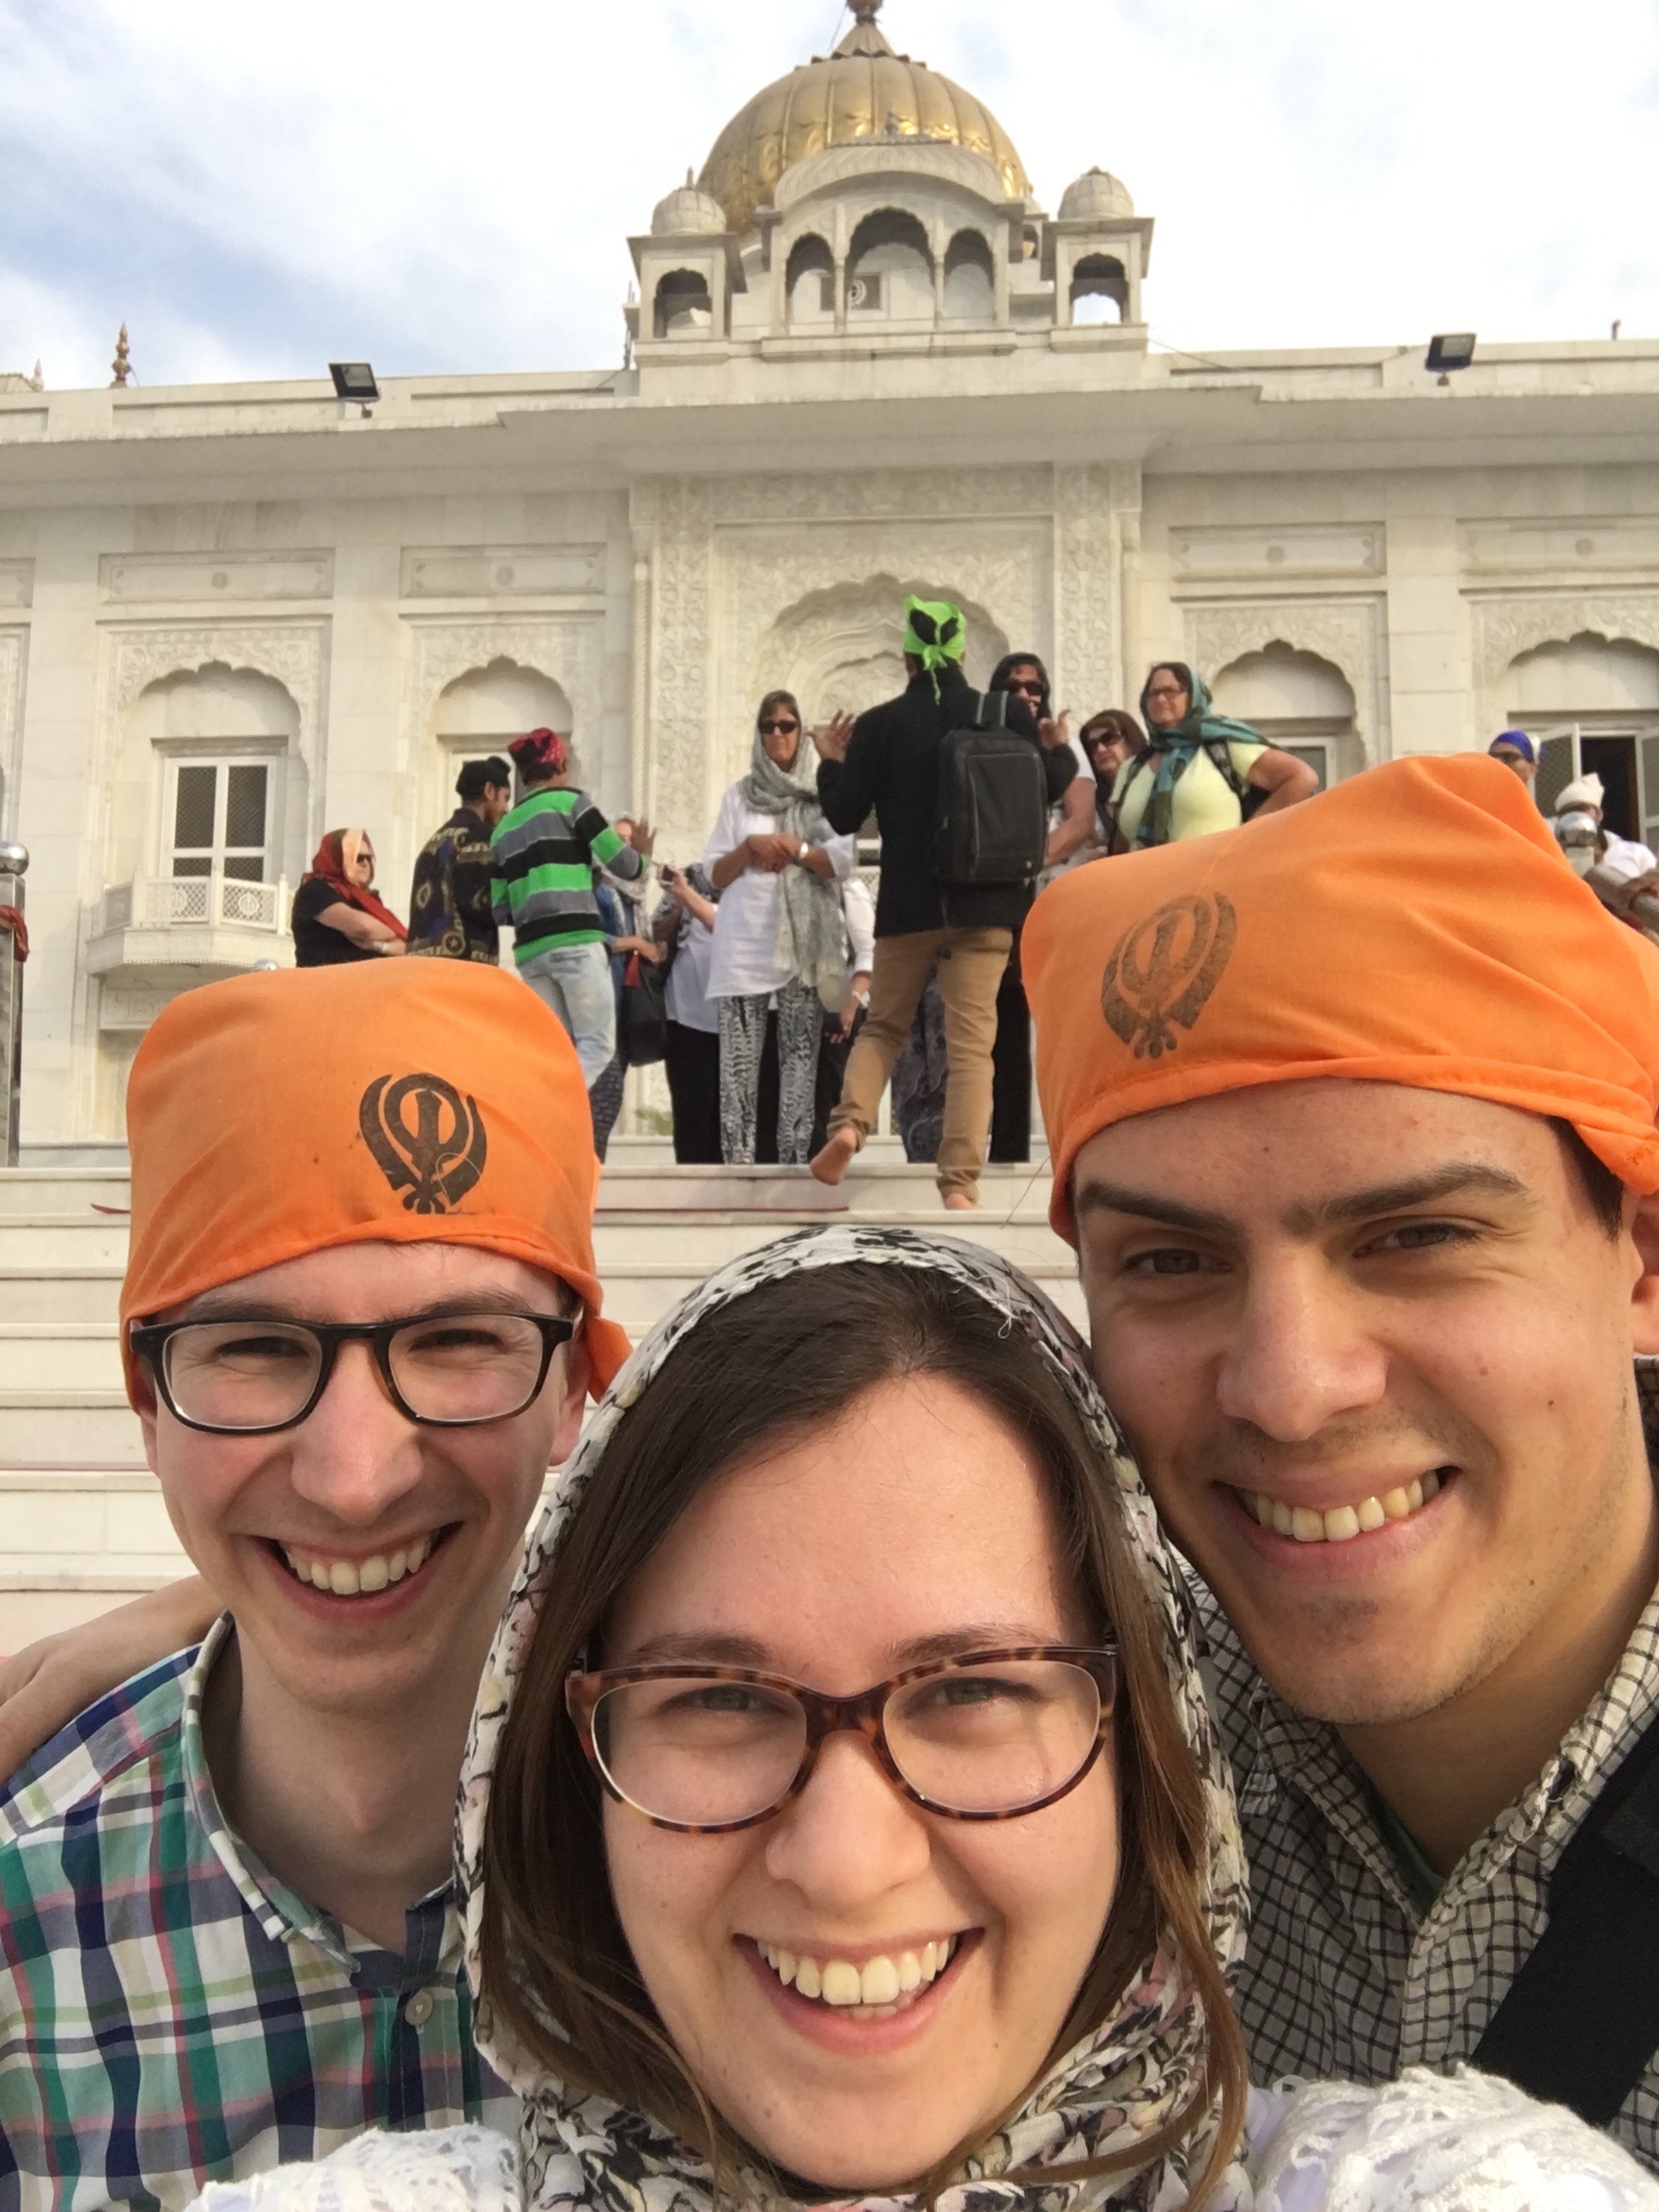 Me, Emma, and Scott visiting a temple in Delhi